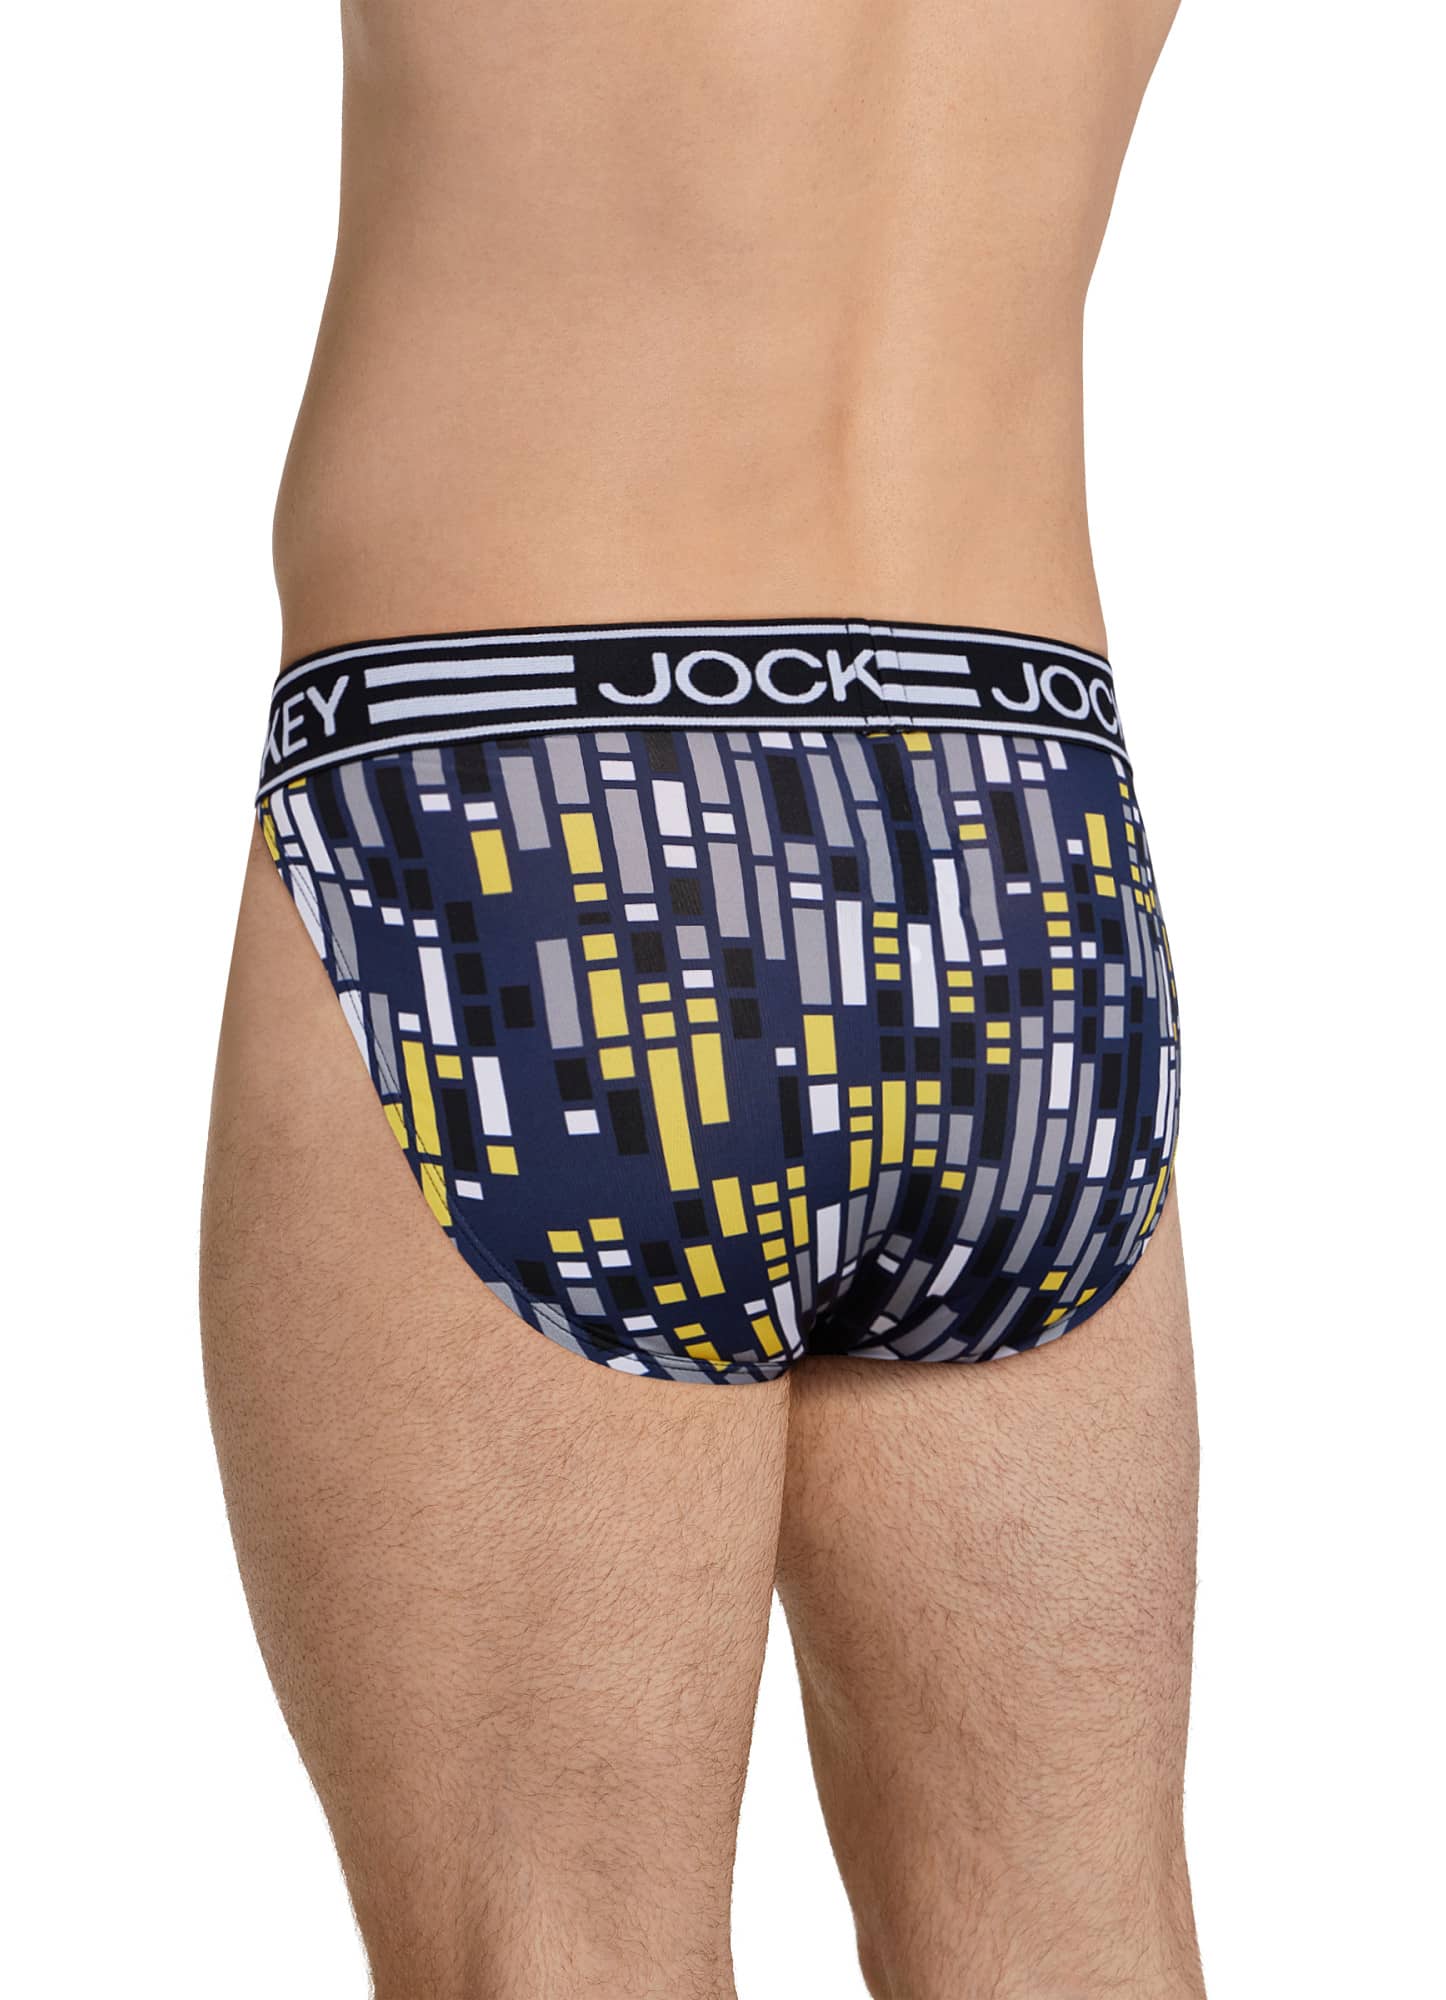 Jockey Men's Underwear Sport Cooling Mesh Performance String